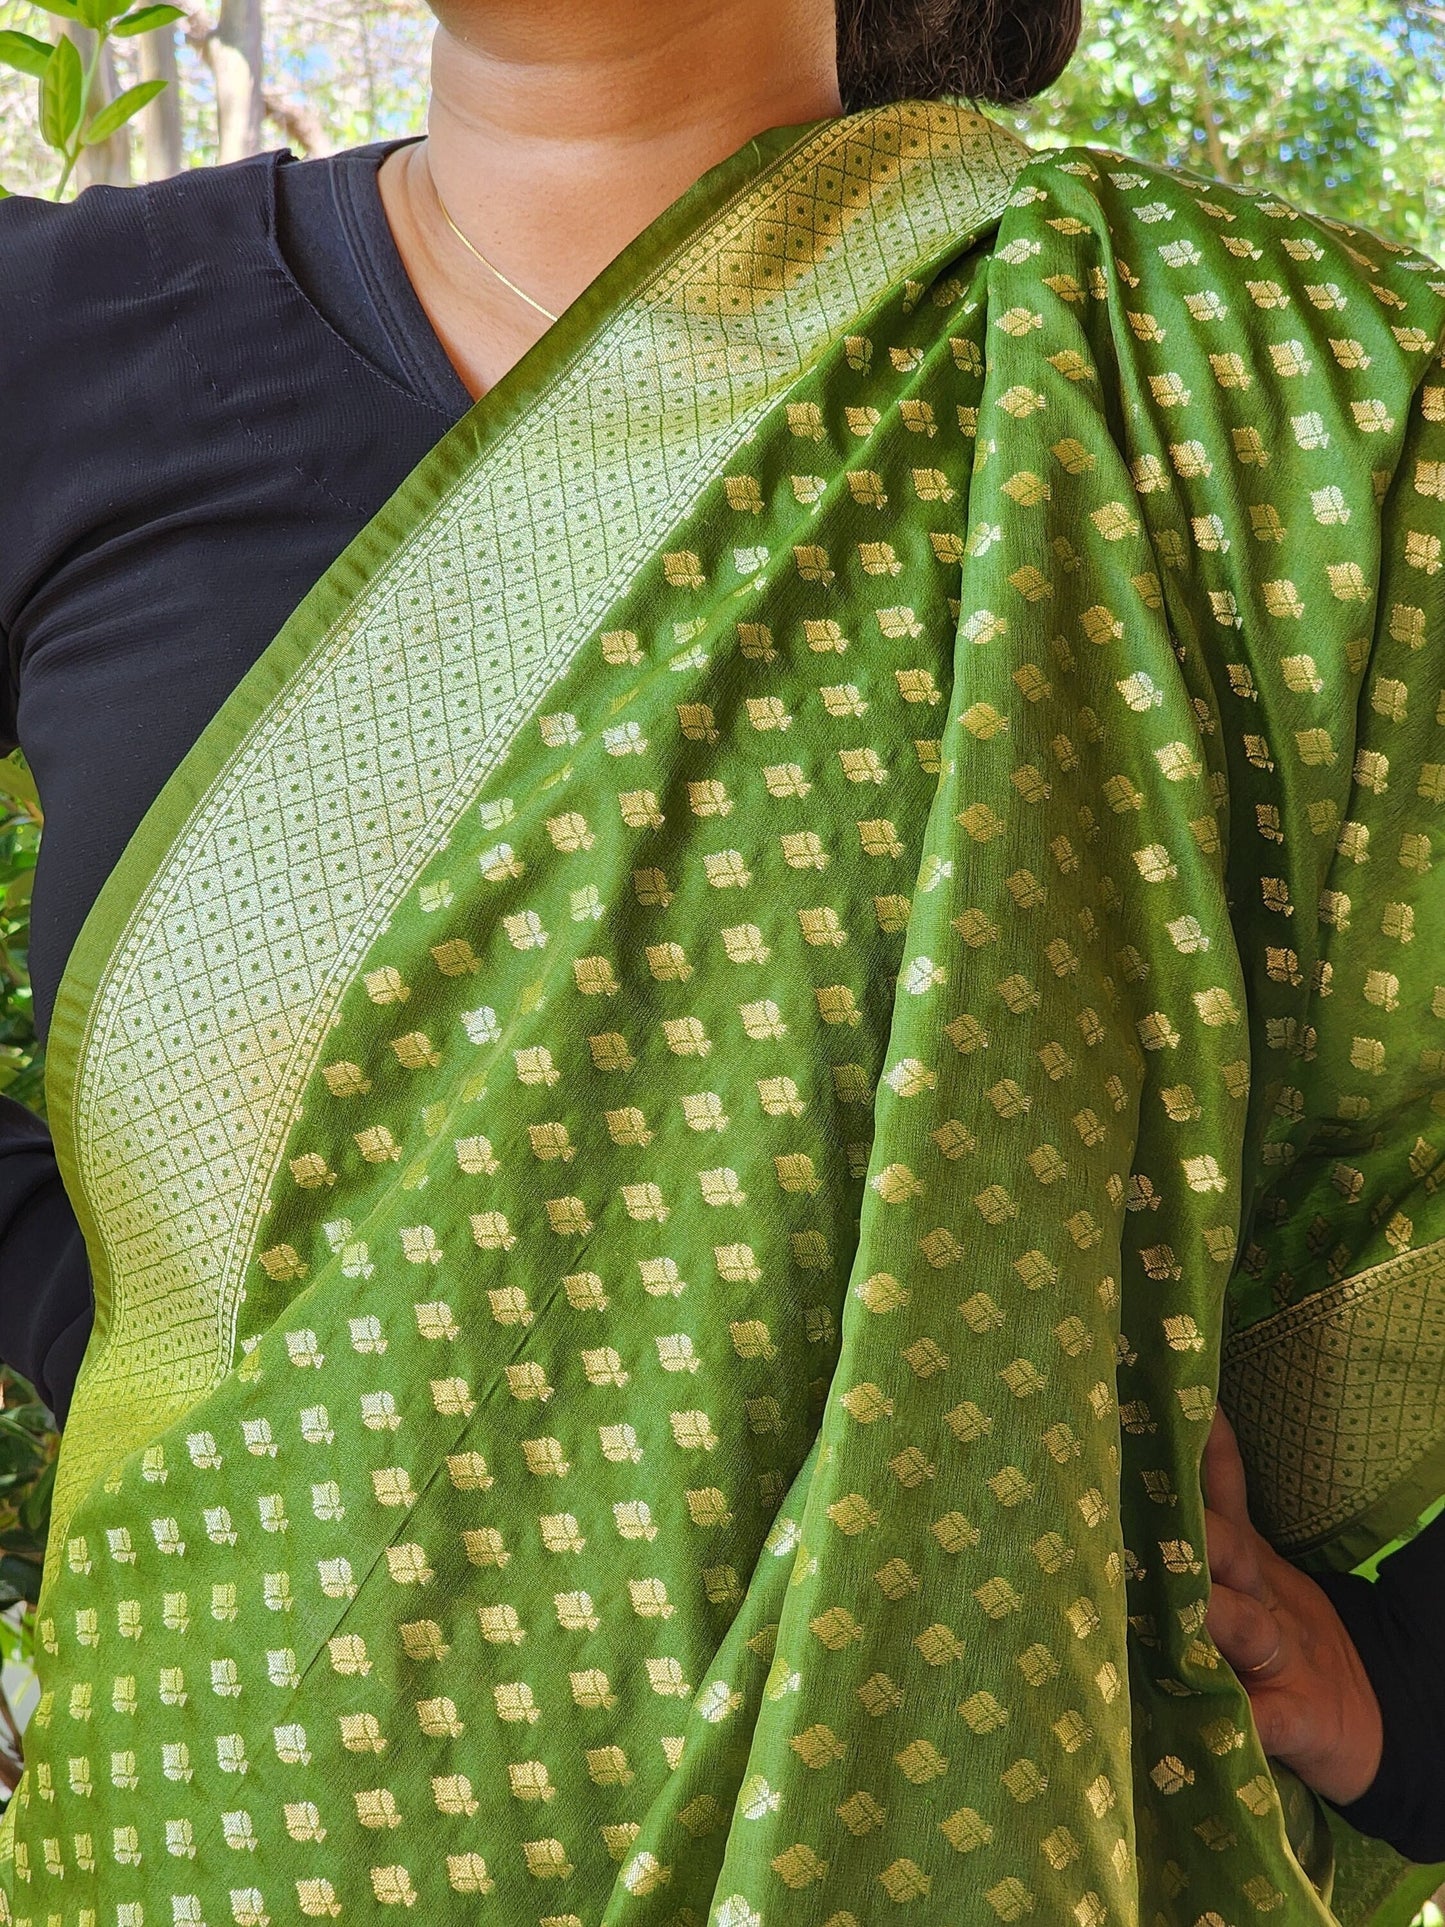 Banarasi Silk Light Green Dupatta with gold handweaving, Indian traditional and Festive designer dupatta, luxurious soft Banarsi dupatta